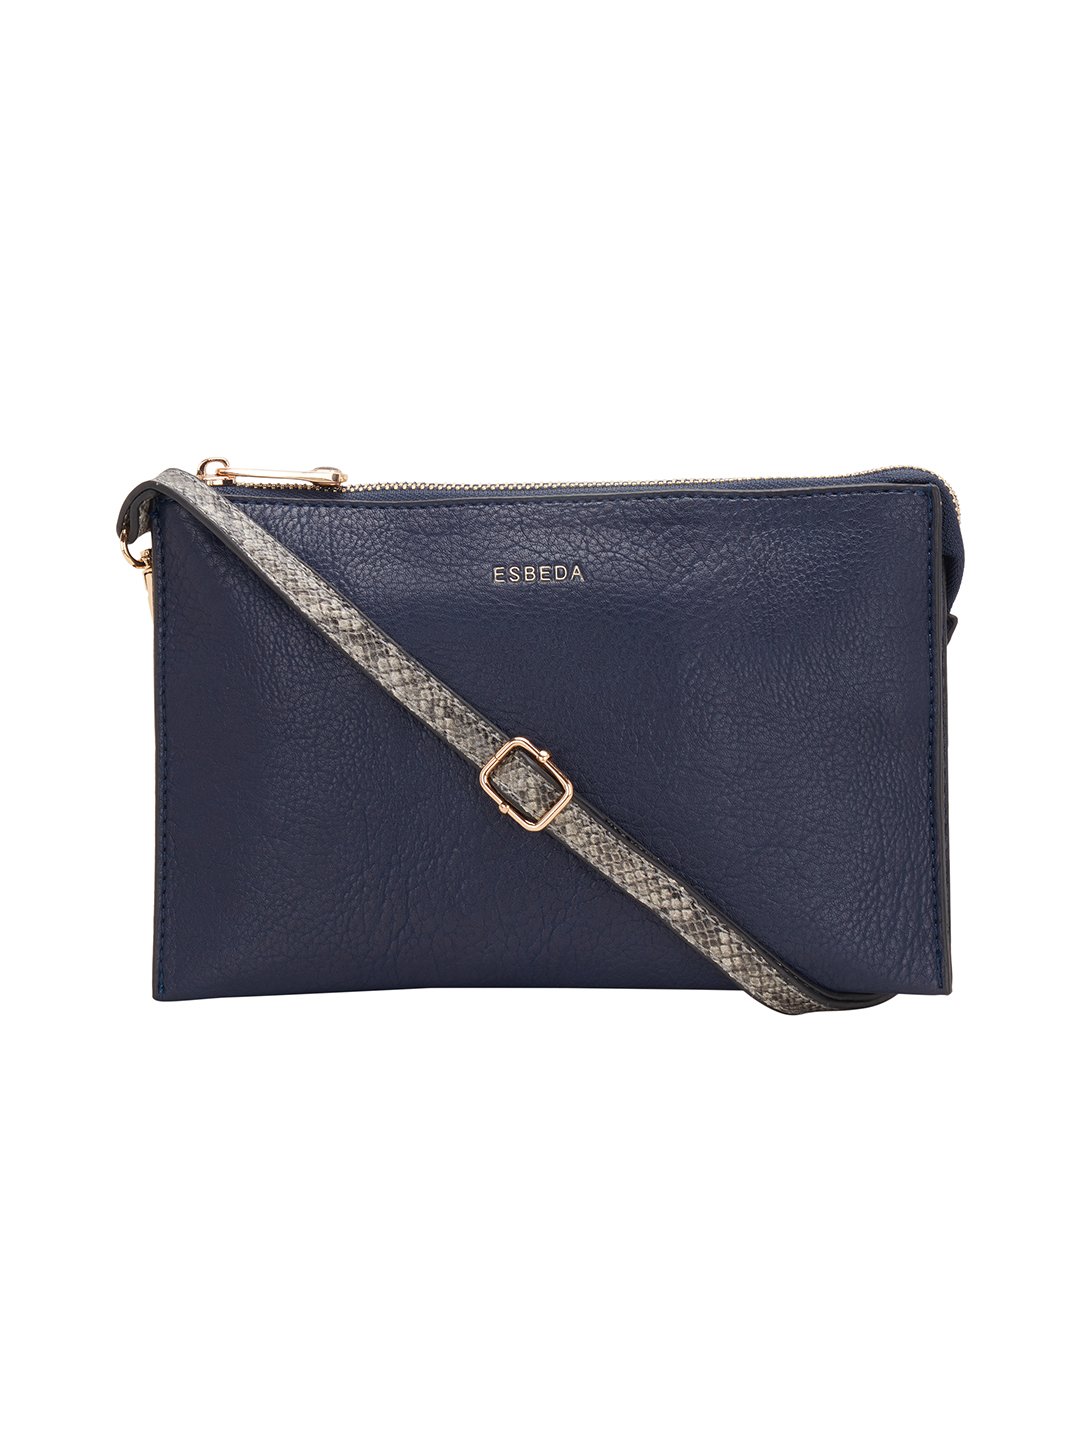 Buy ESBEDA Pista Color Solid Zip Over Tiny Handbag For Women at Amazon.in